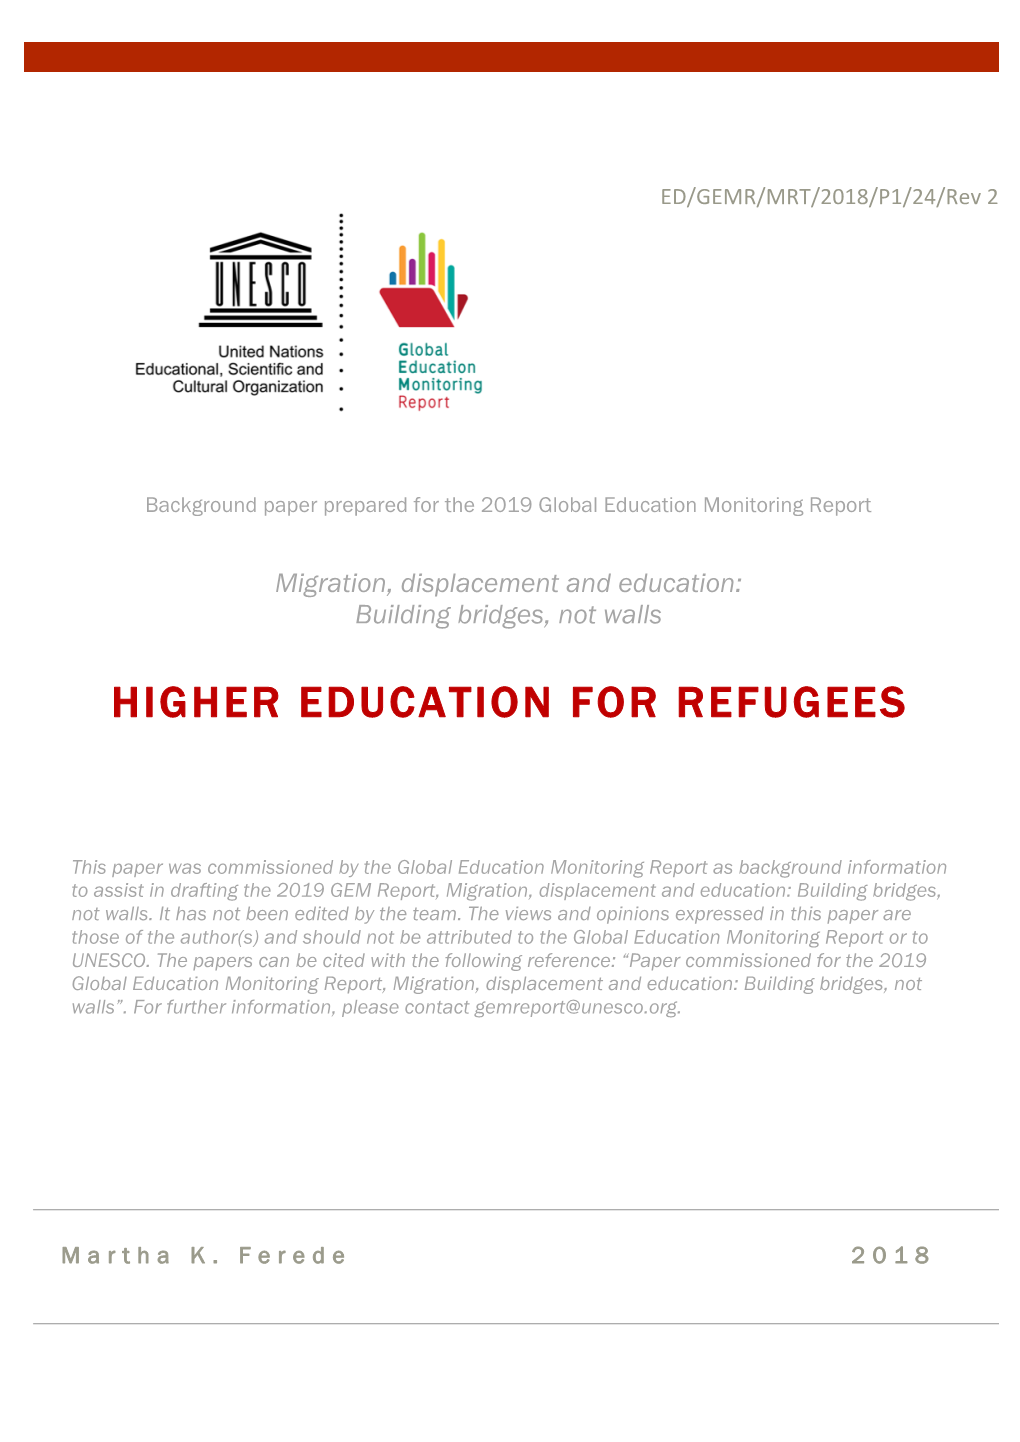 Higher Education for Refugees